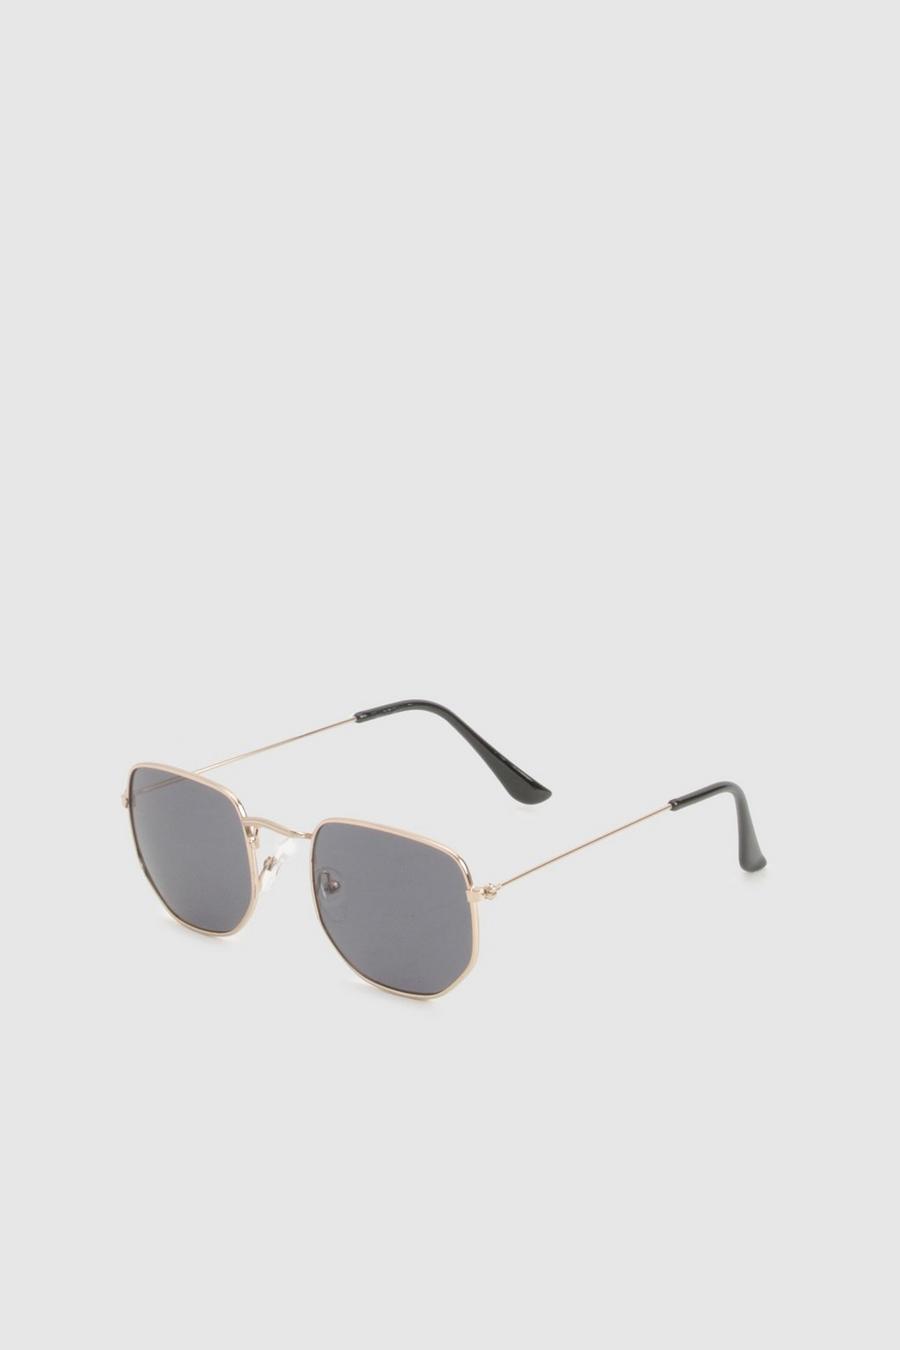 Gold Tinted Metal Frame Braun Sunglasses